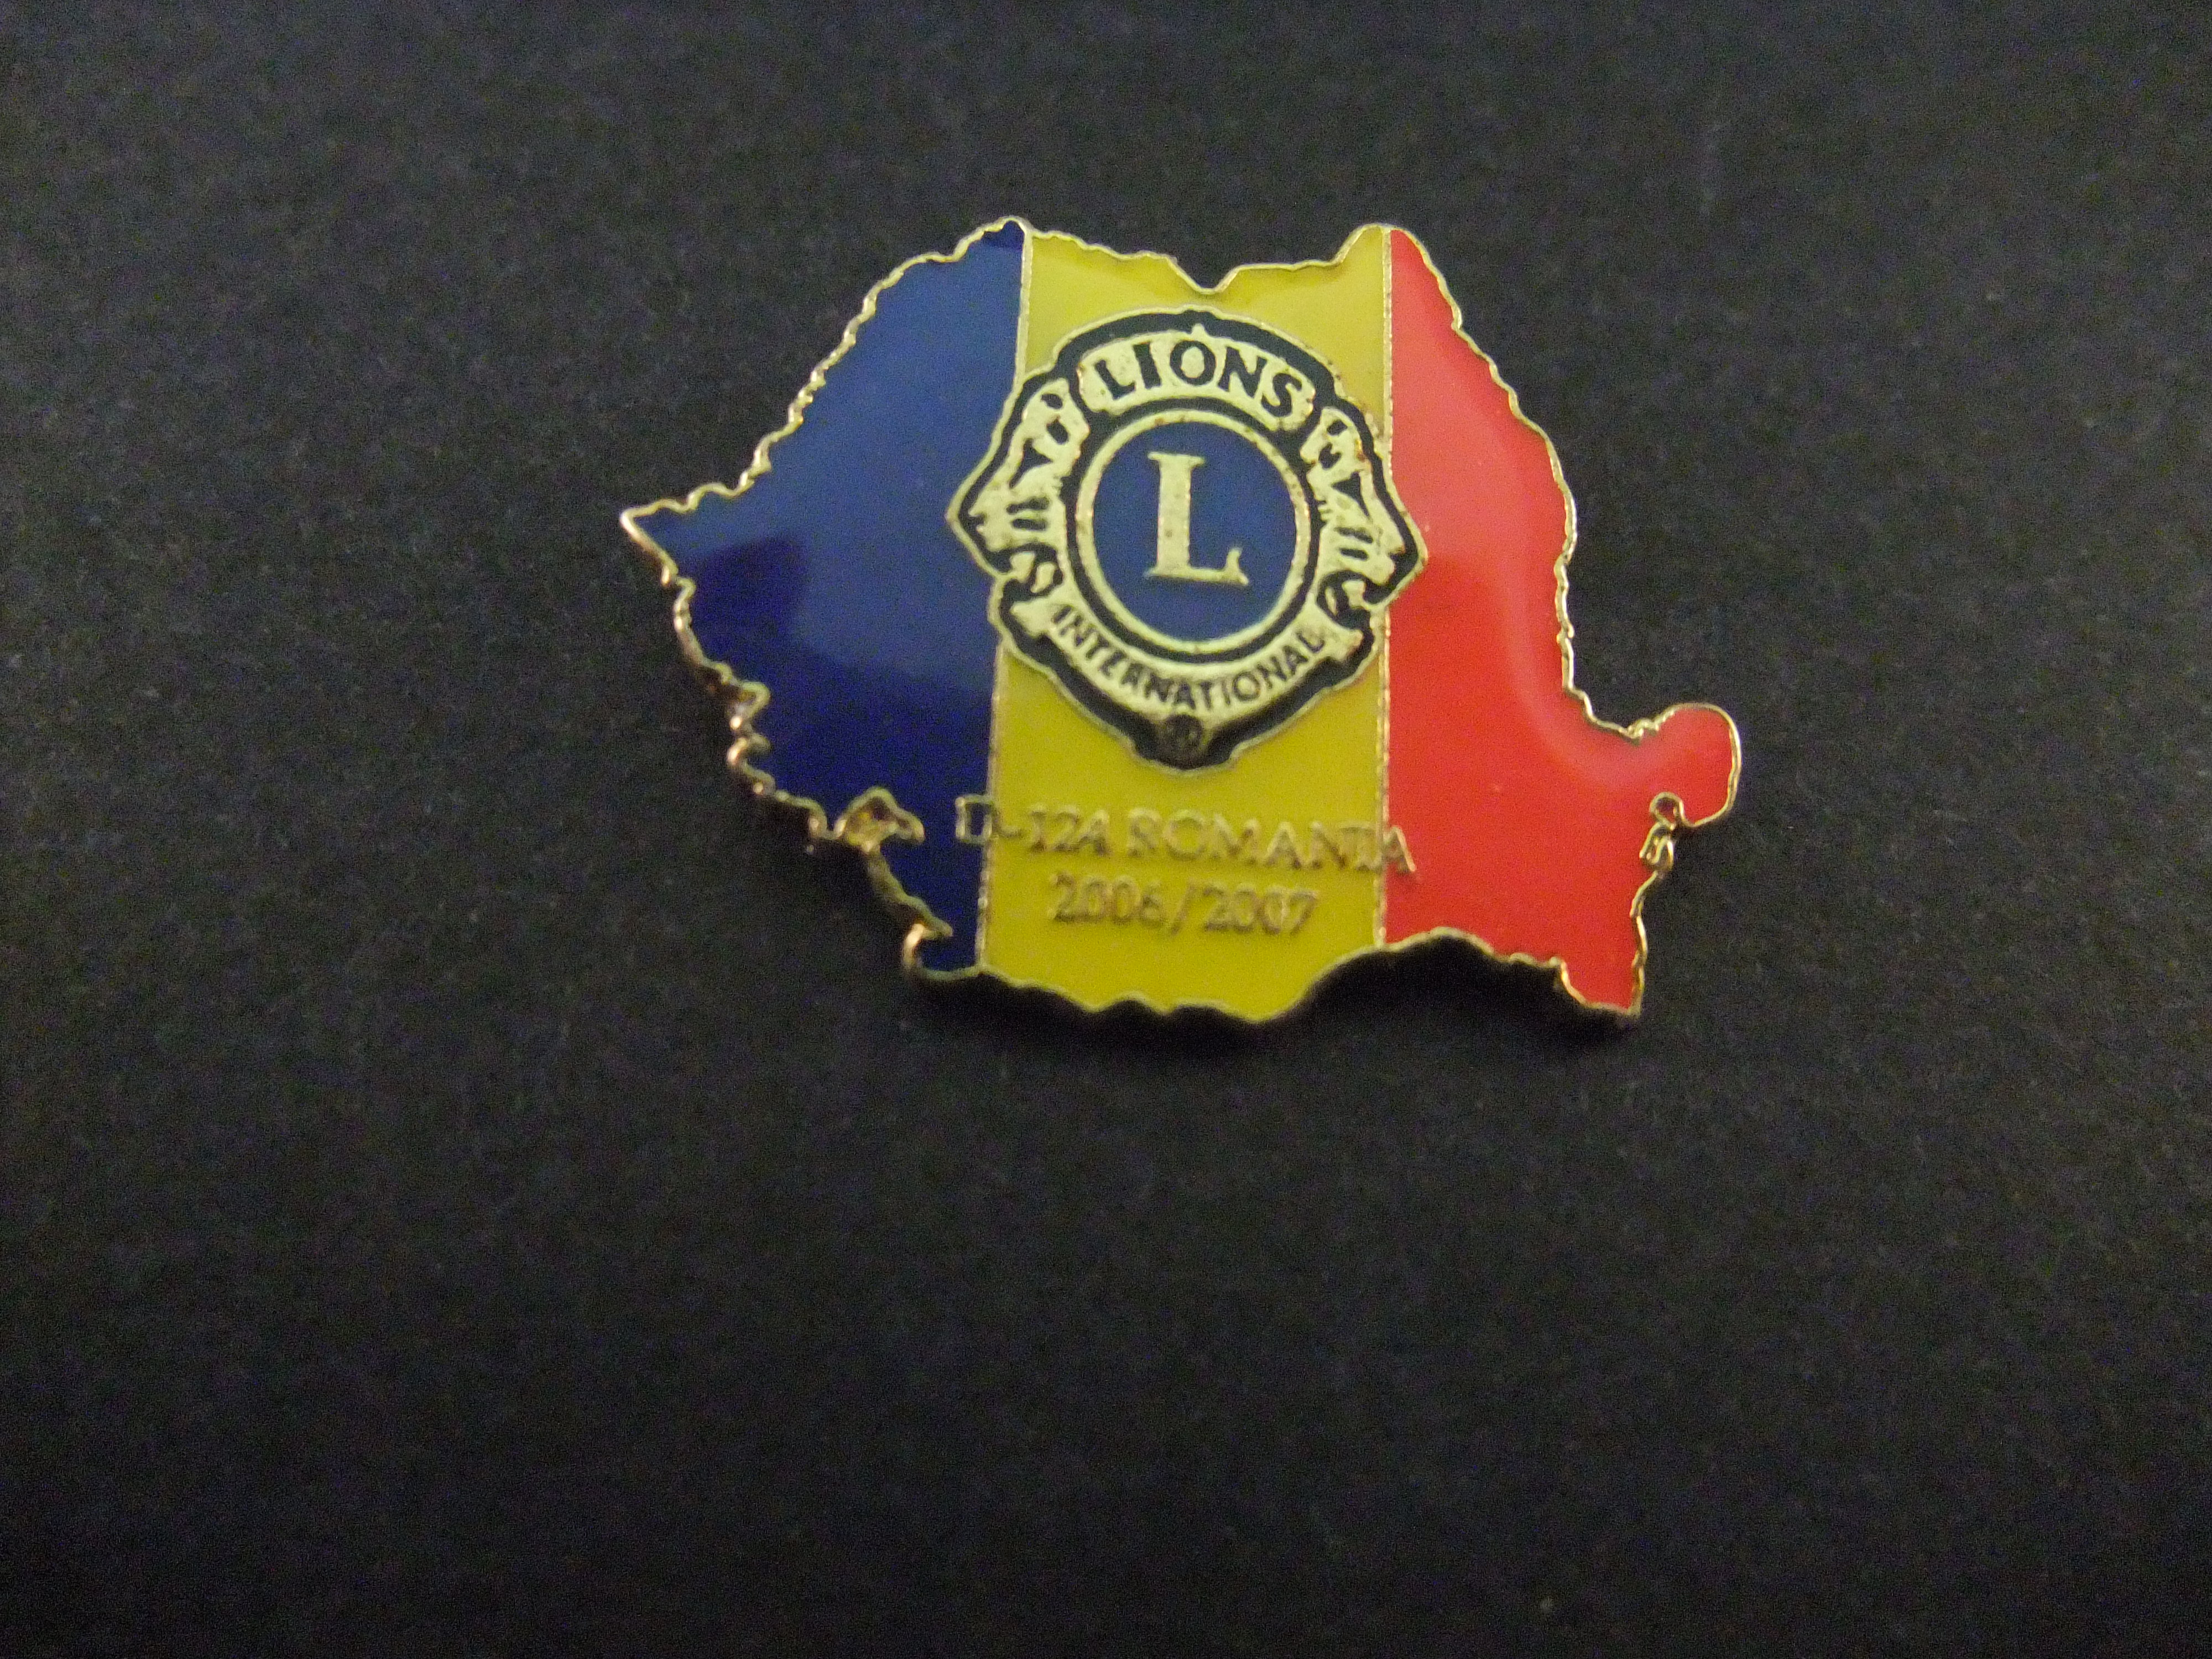 Lions Club International D 124 Roemenië